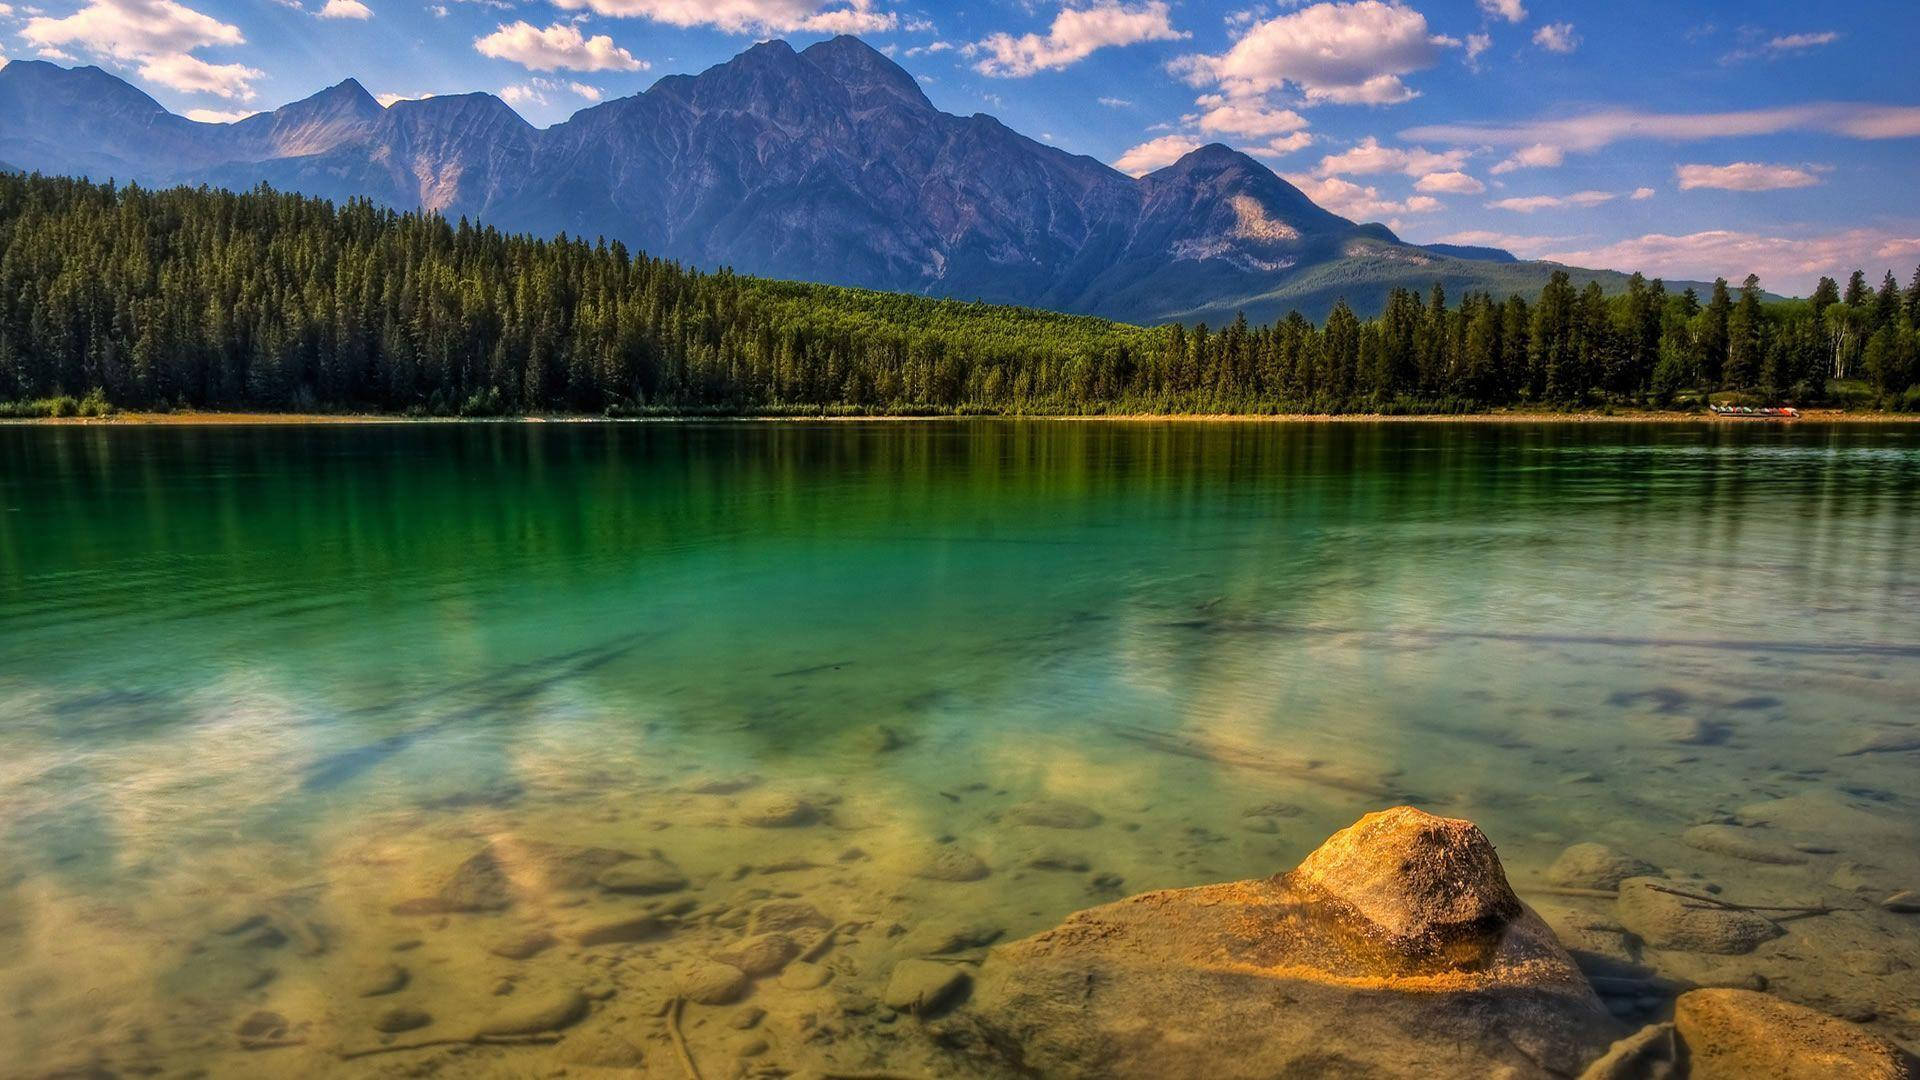  See Hintergrundbild 1920x1080. Download Clear Lake Aesthetic Landscape Wallpaper